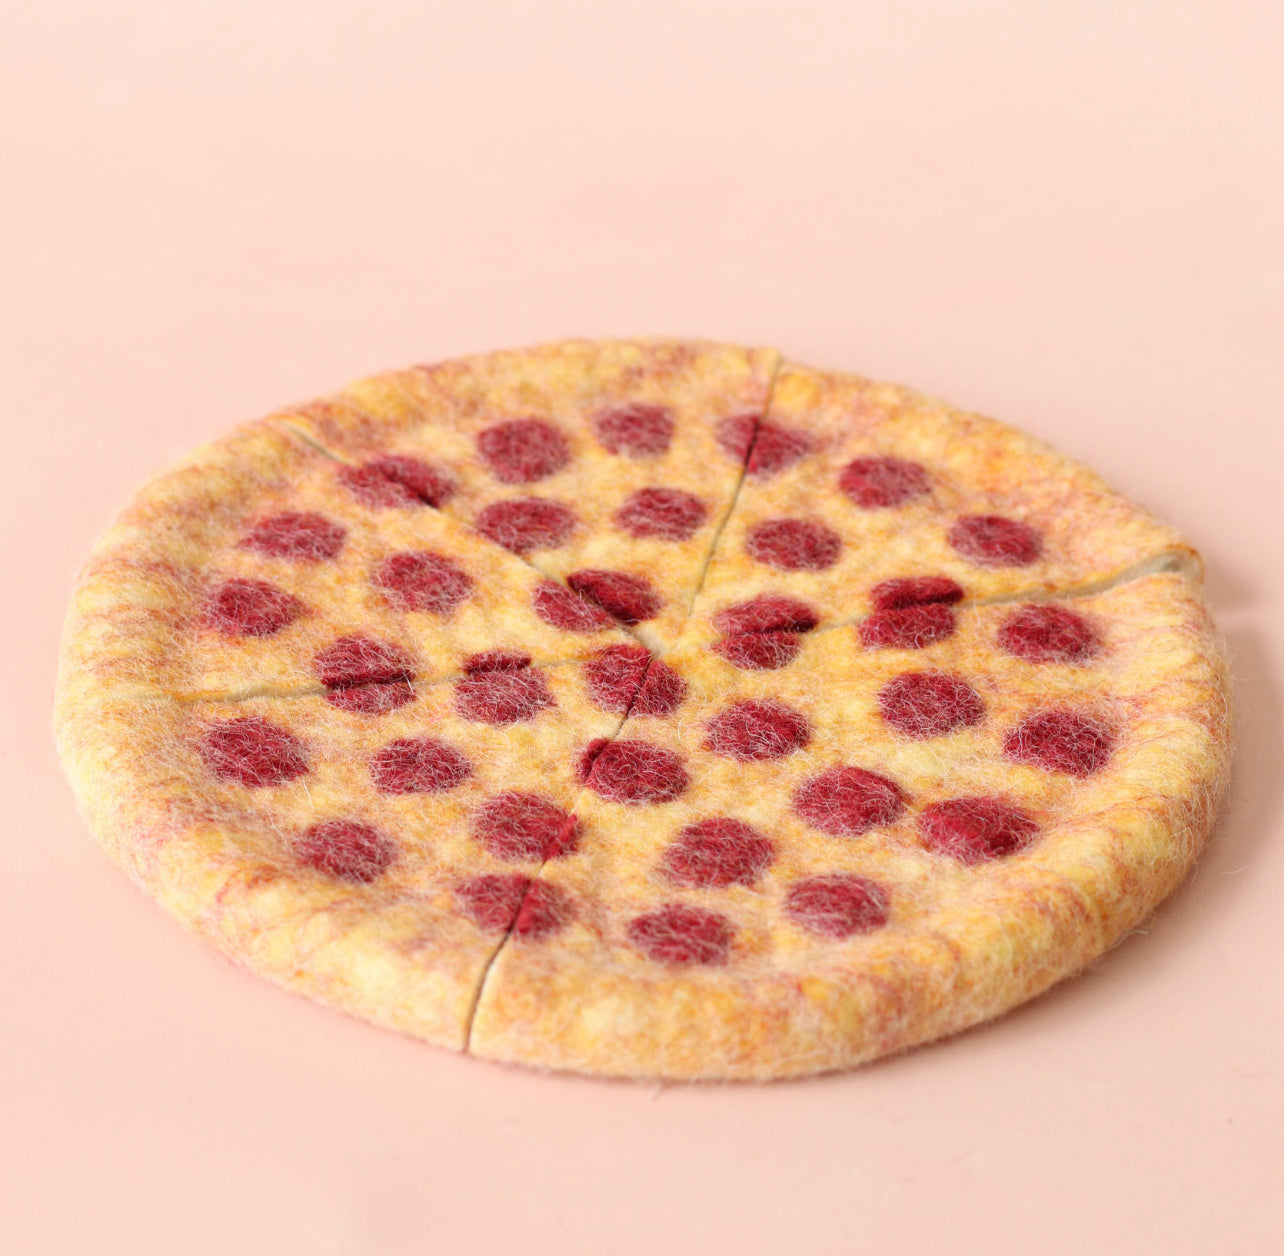 Whole pepperoni pizza